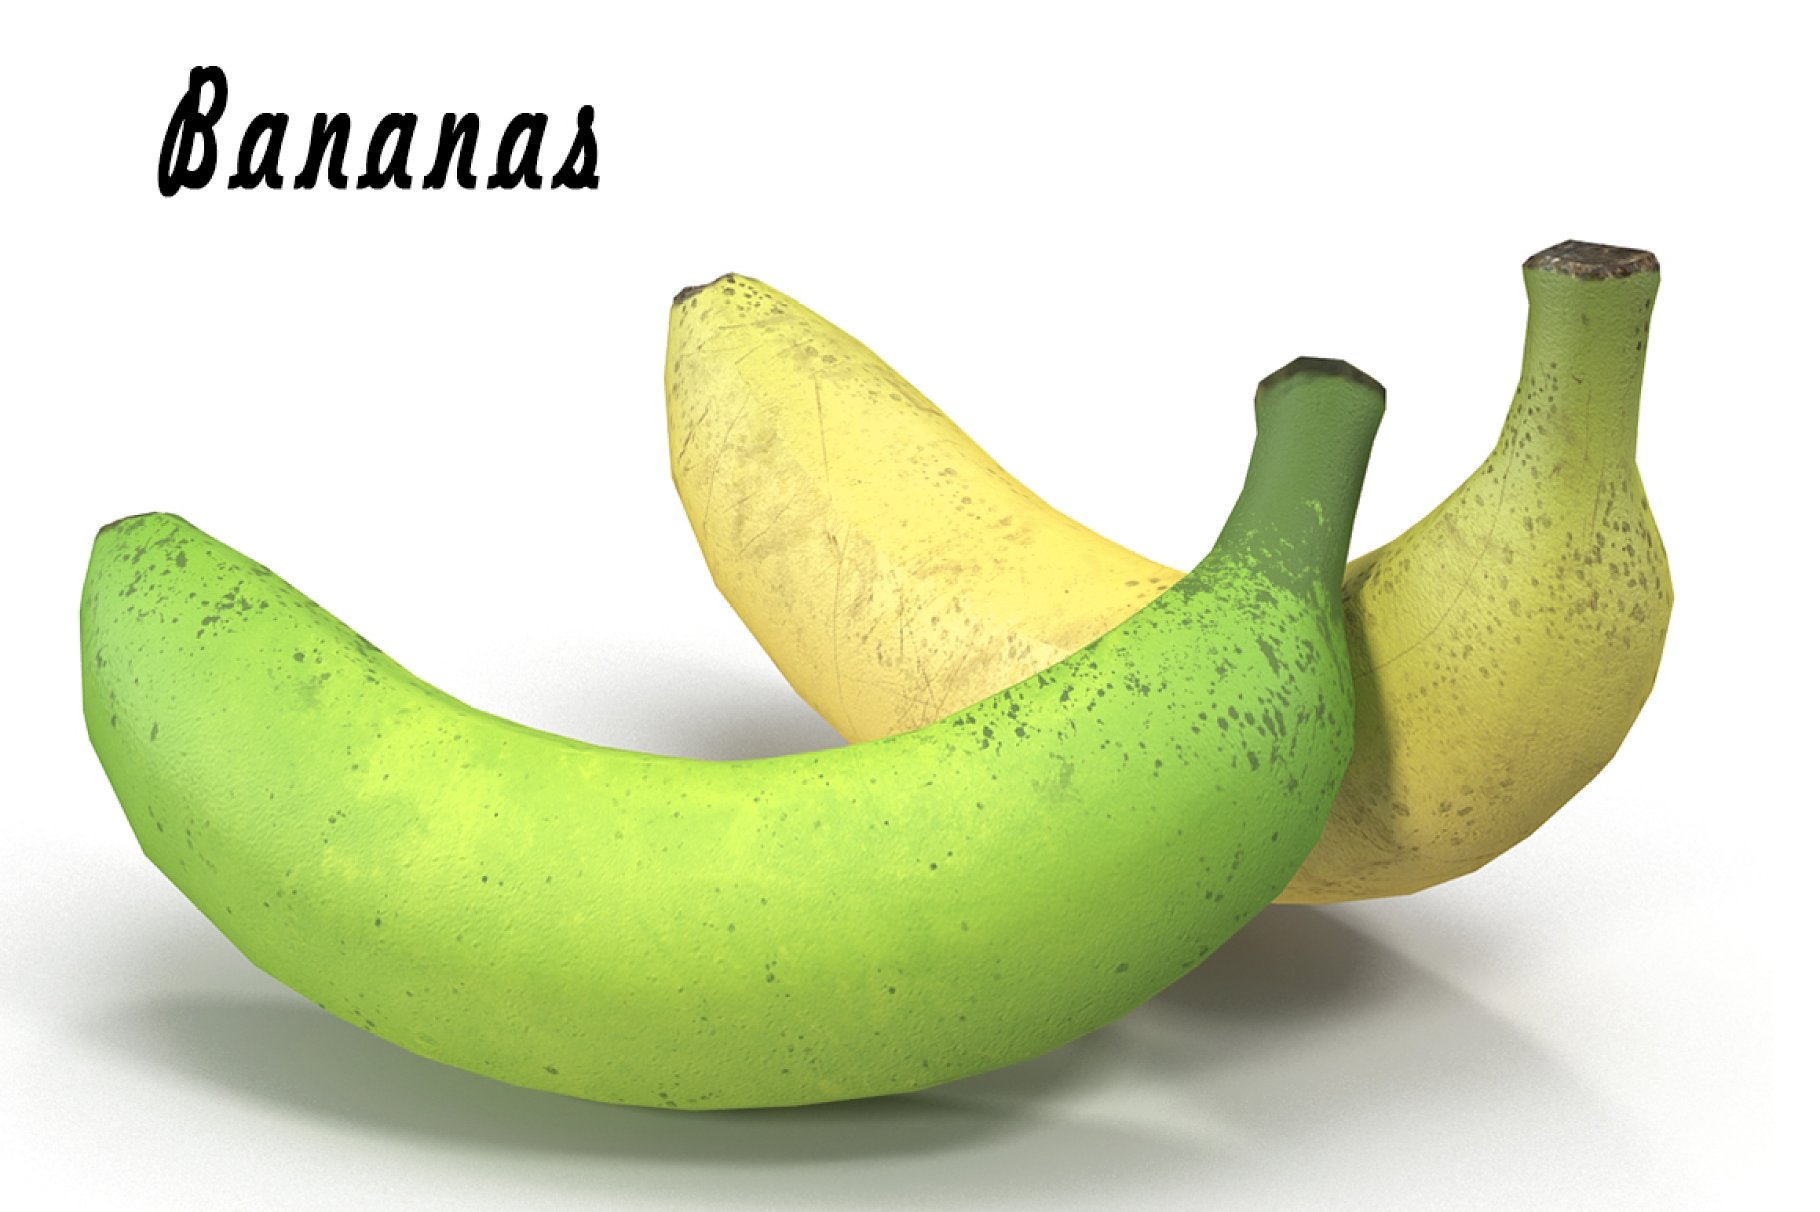 An image of a banana.